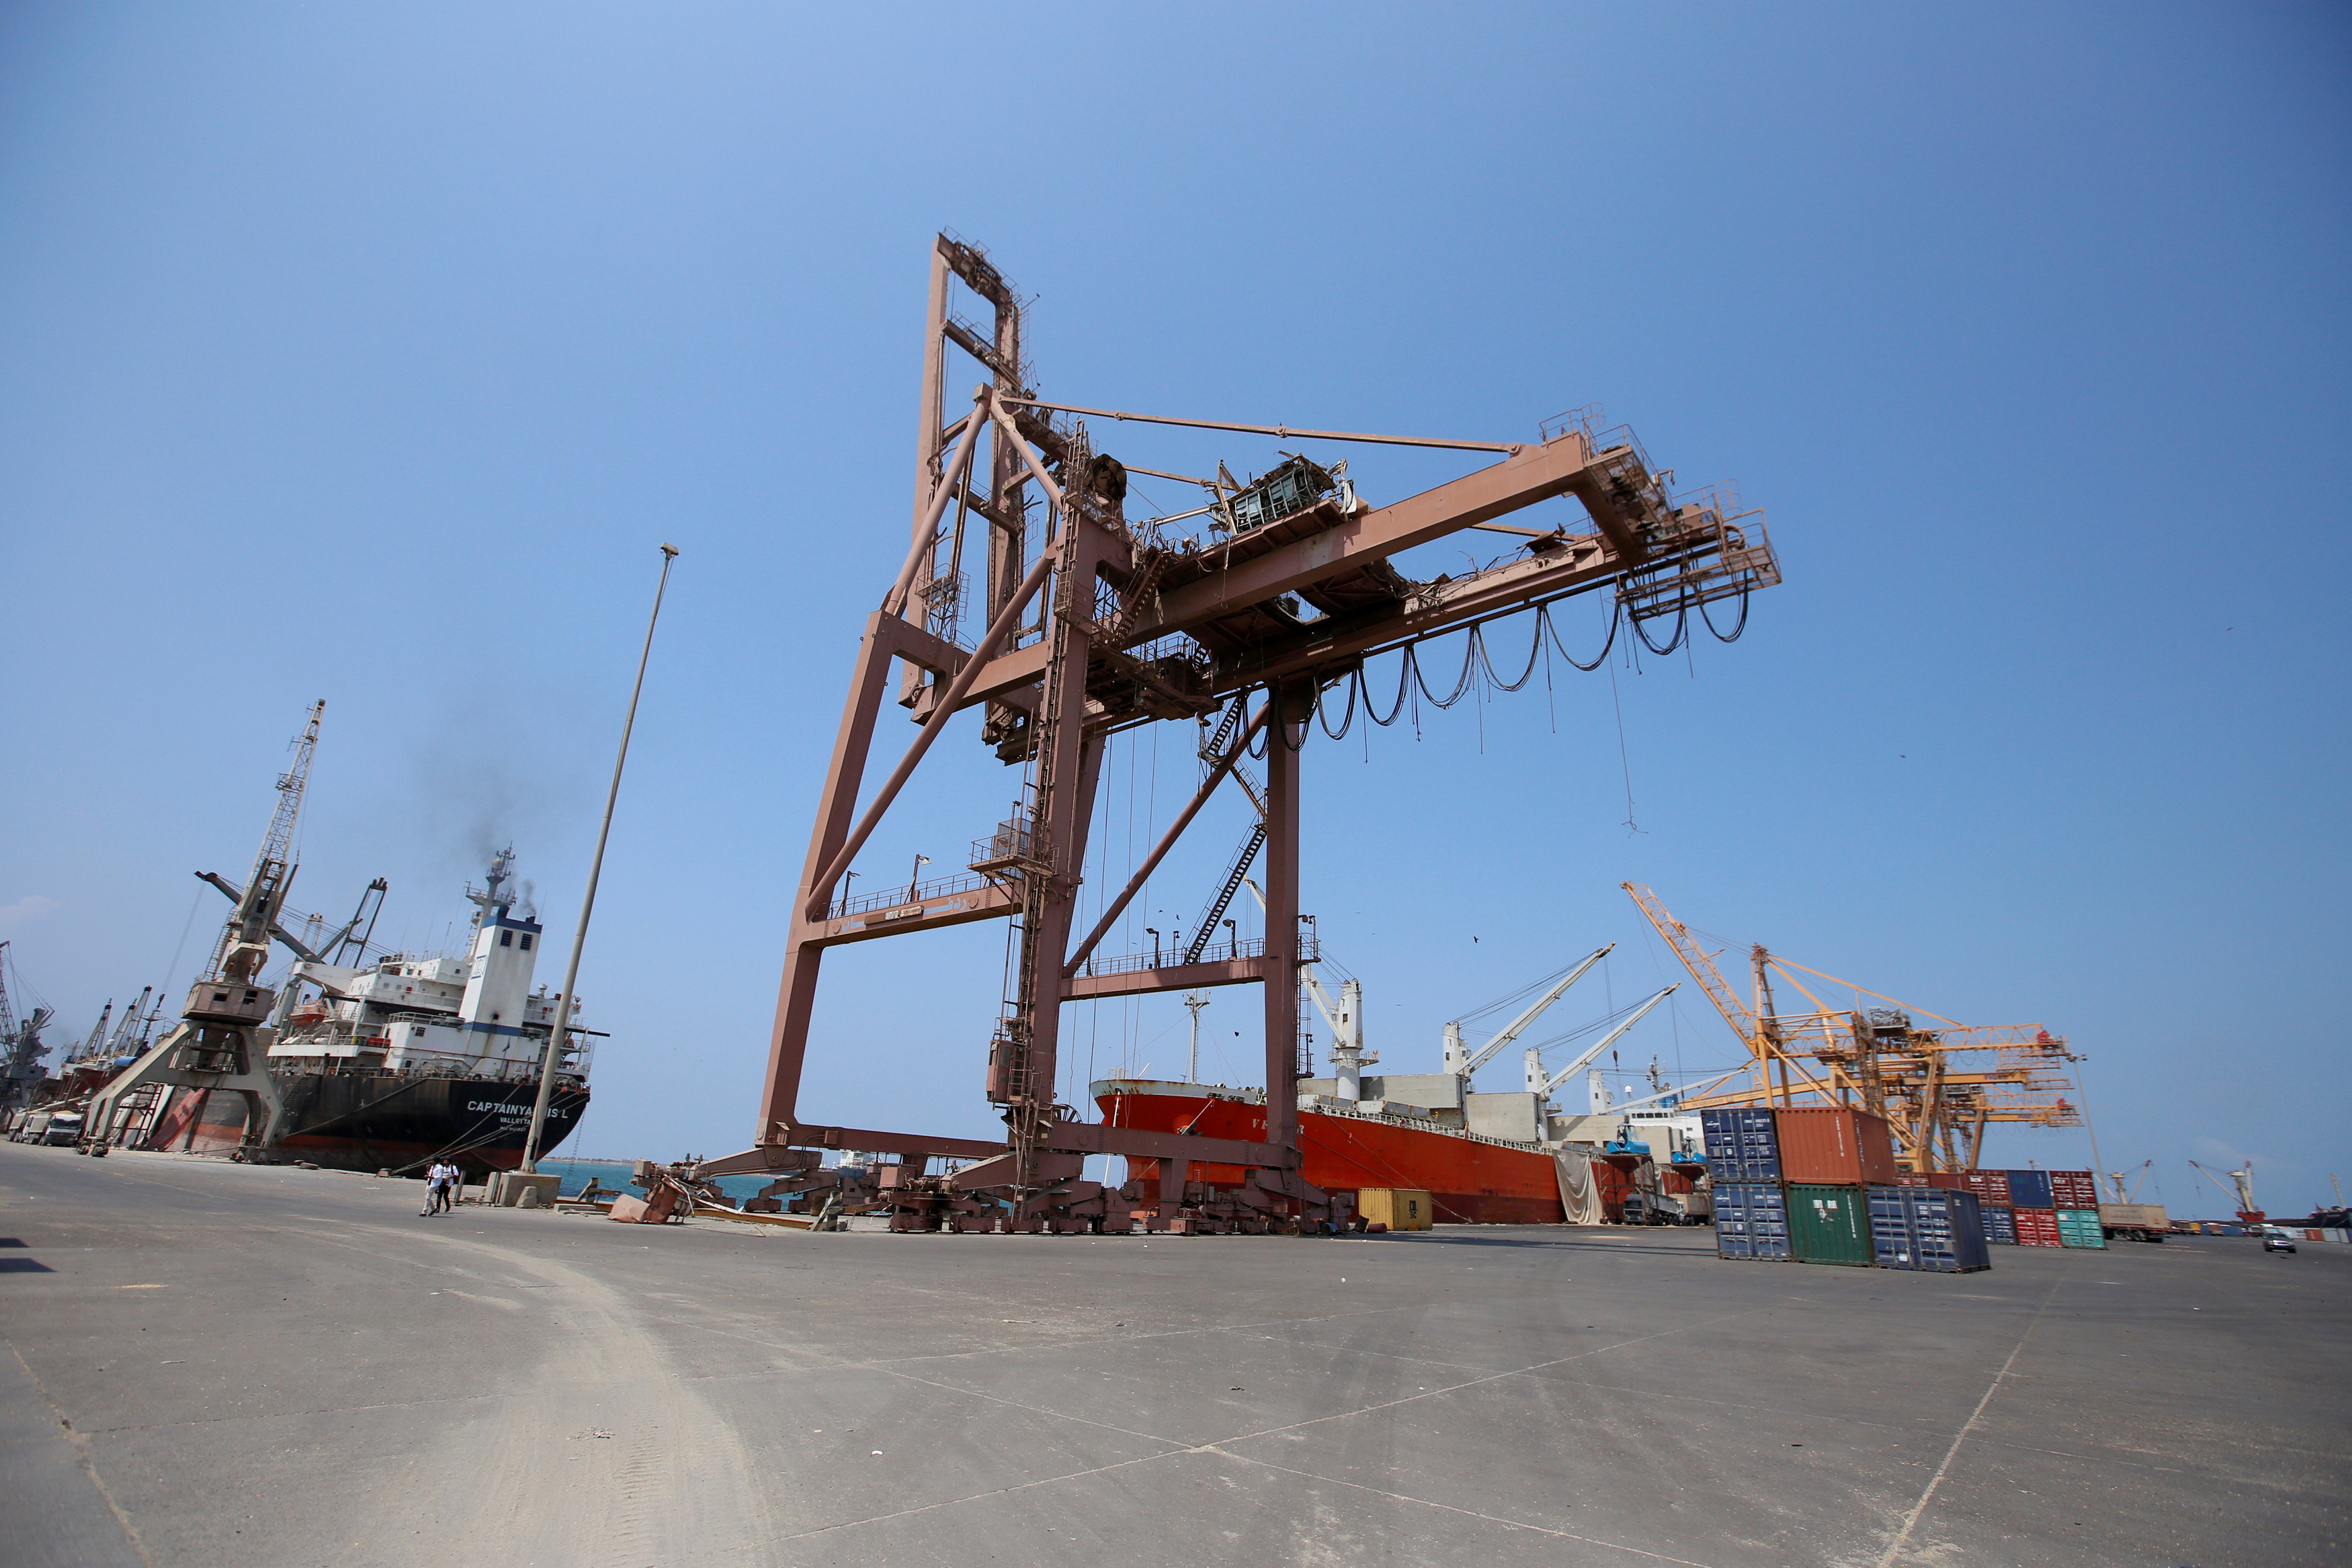 View of the Red Sea port of Hodeidah, Yemen